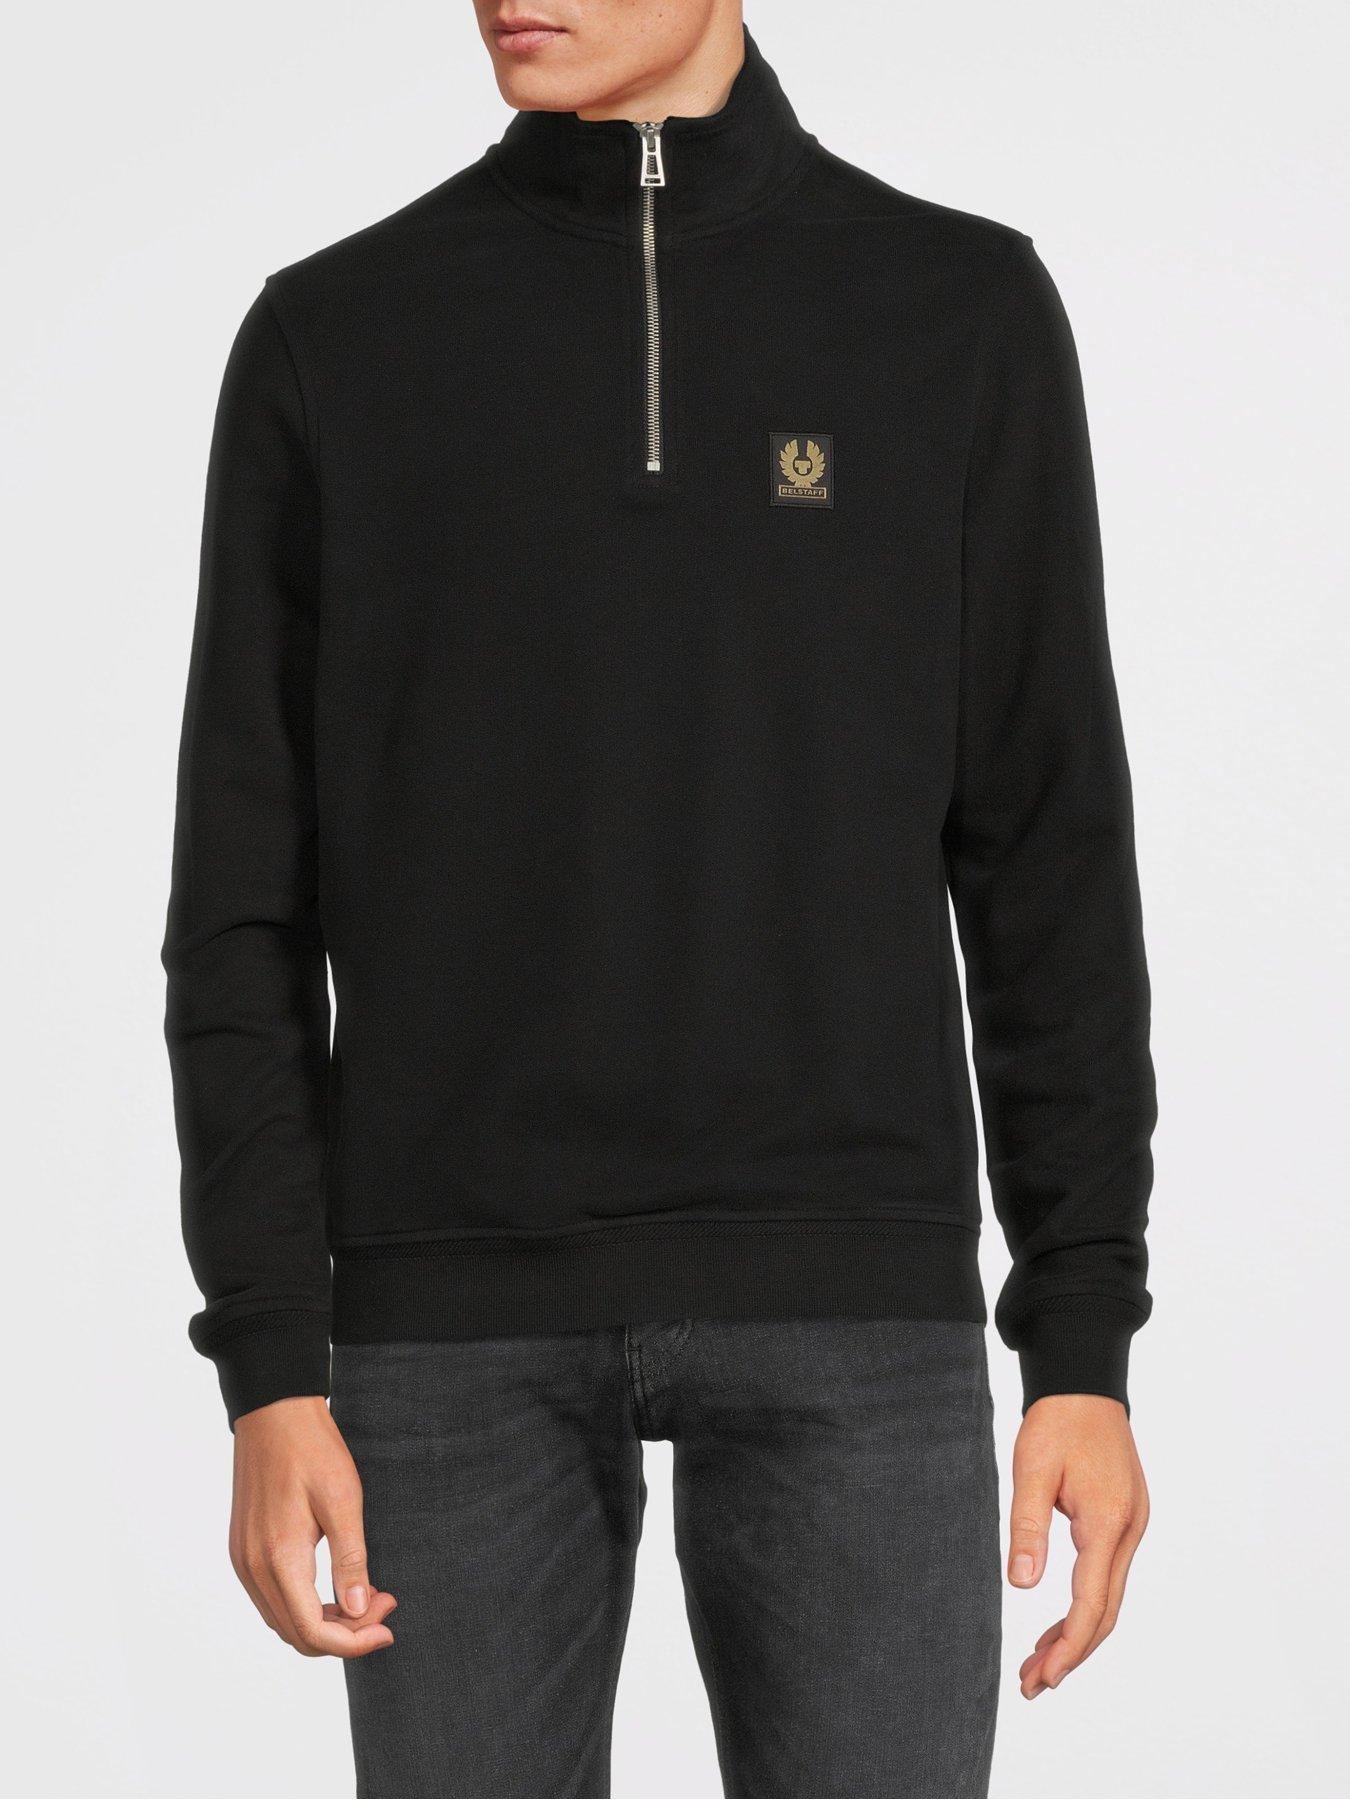 Black KIDS FASHION Jumpers & Sweatshirts Zip Lonsdale sweatshirt discount 94% 